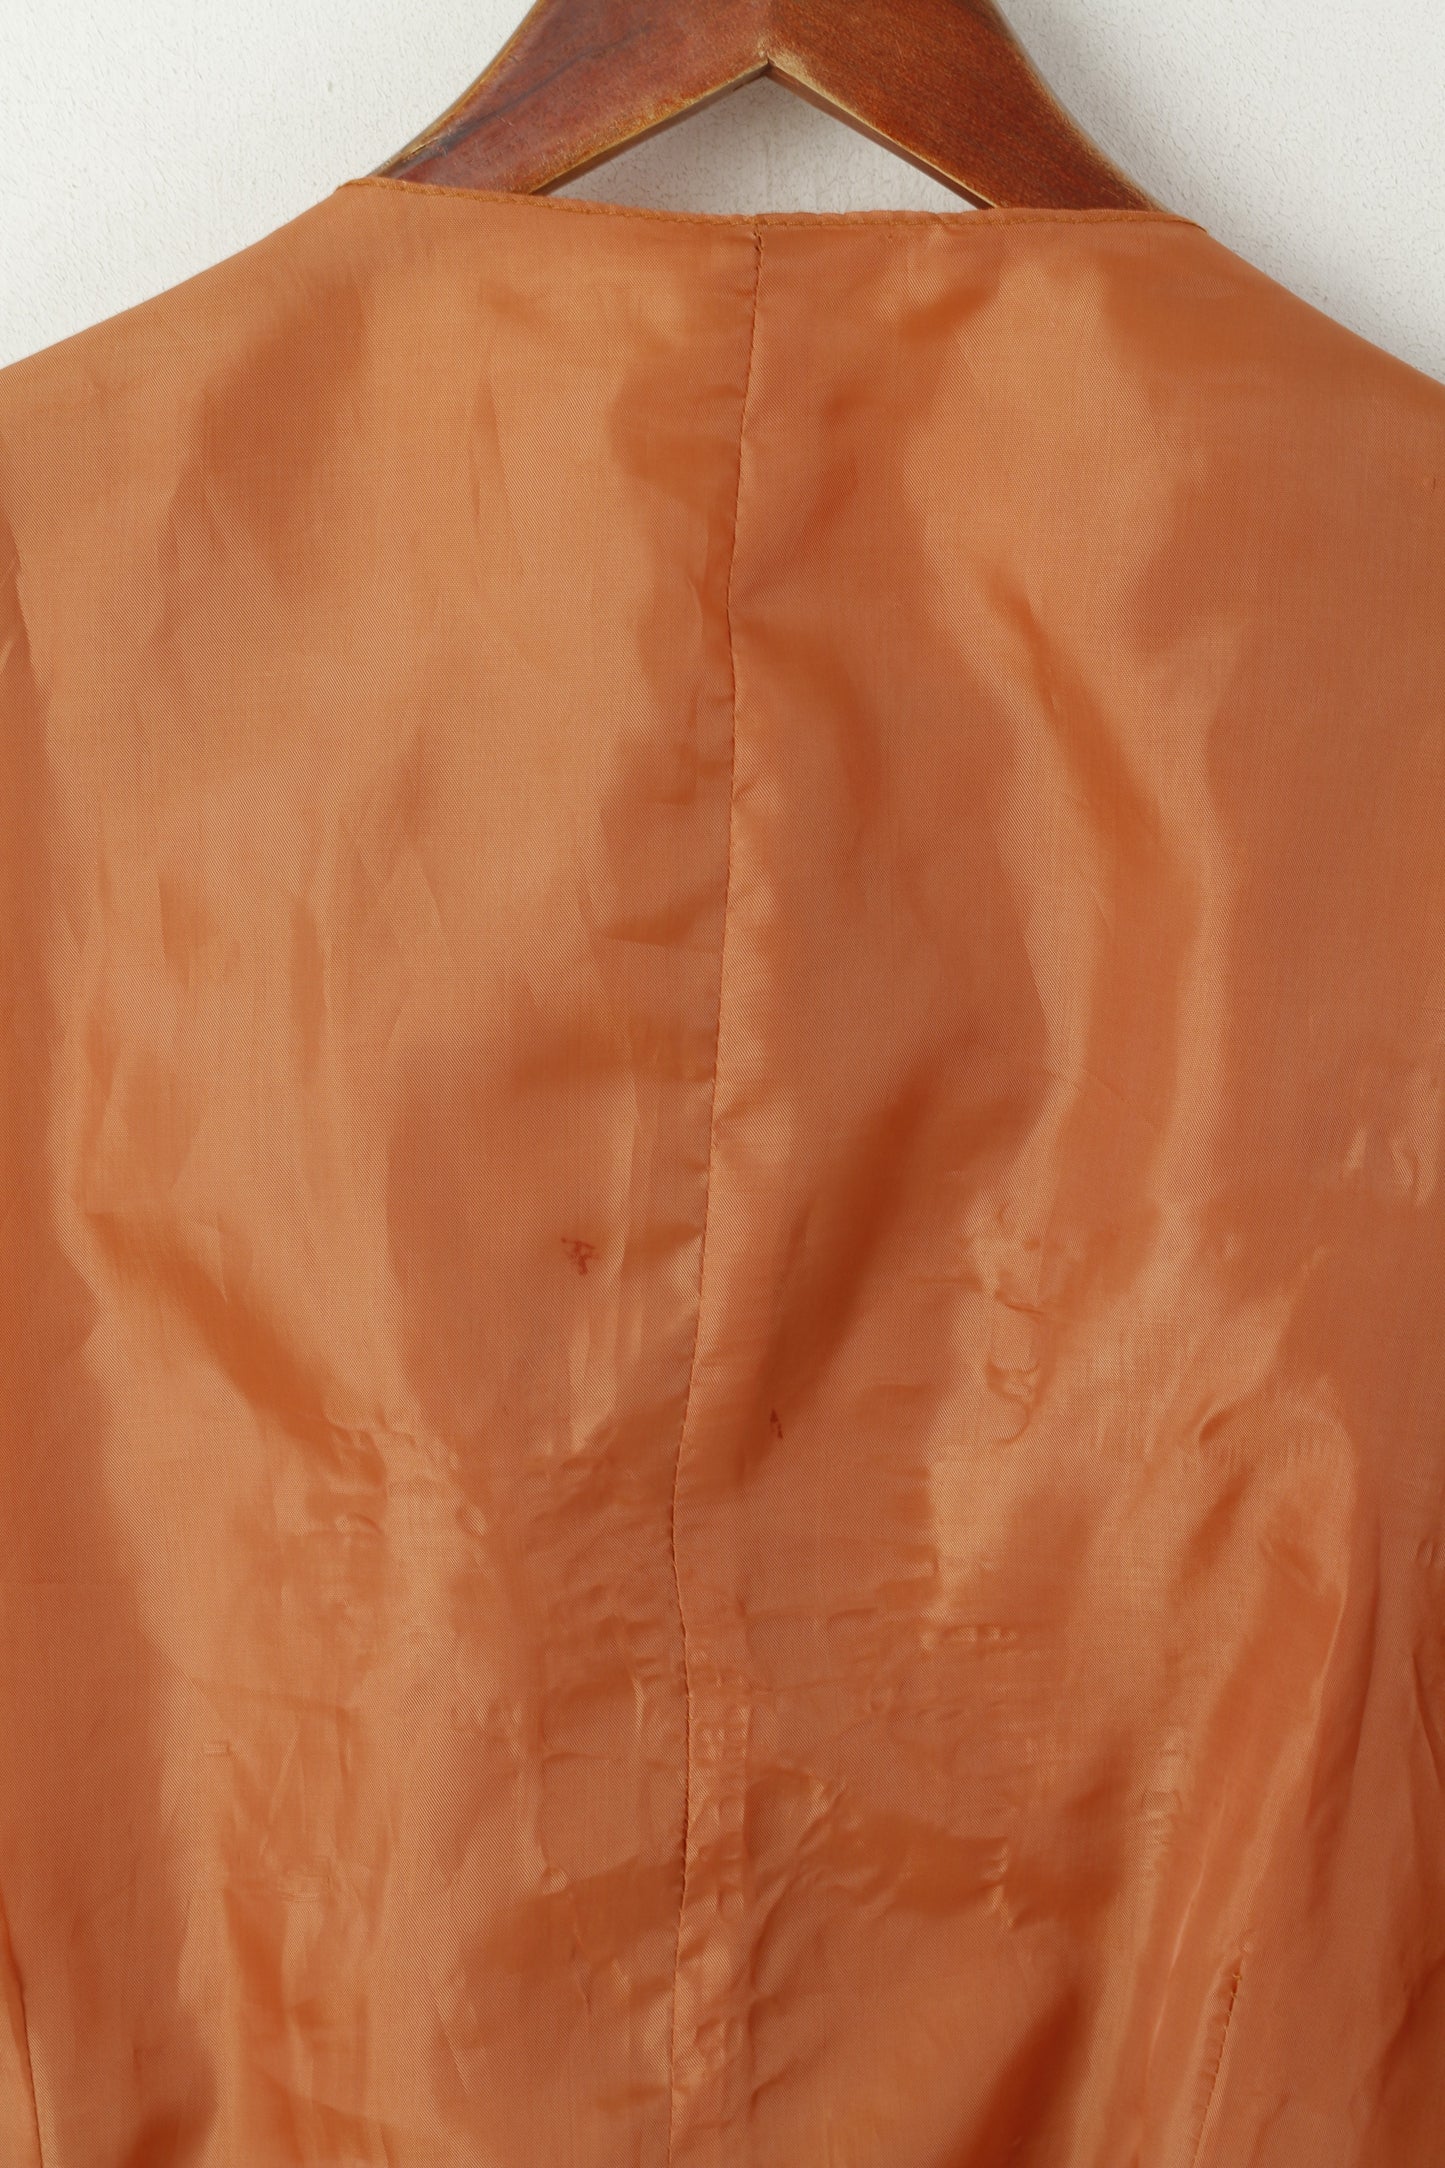 Gilet in pelle vintage da uomo 52 L. Gilet monopetto in pelle scamosciata color cammello vintage